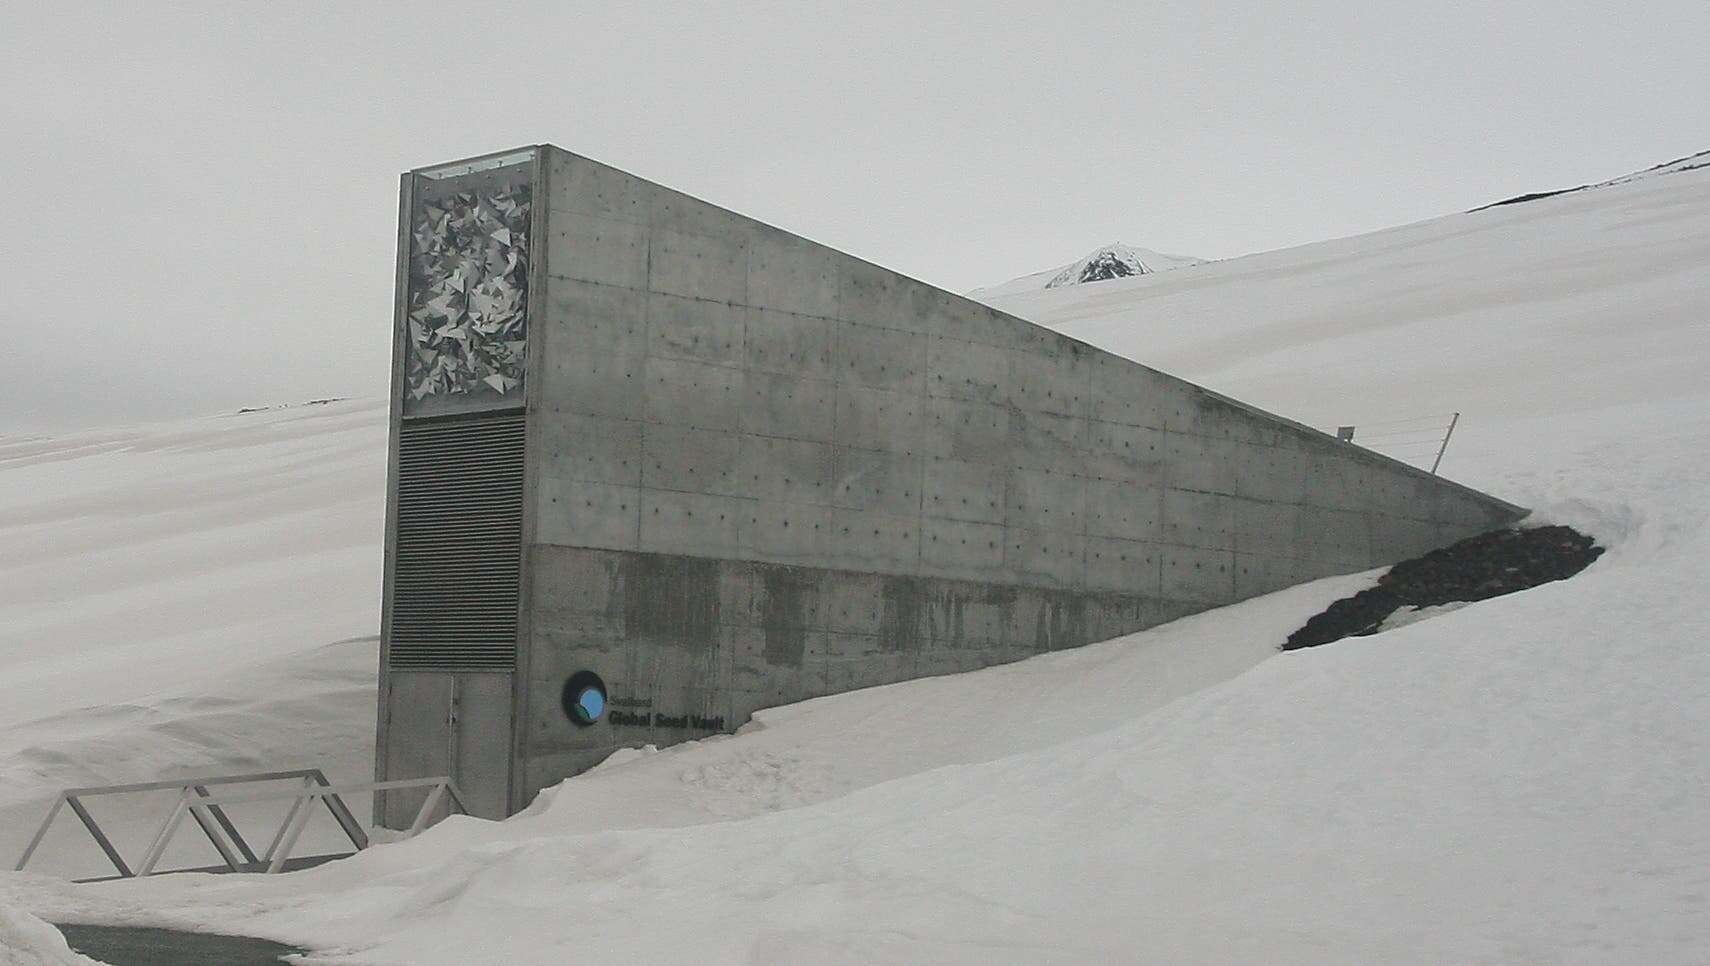 The Svalbard Global Seed Vault. Image credits: Miksu / Wikipedia.